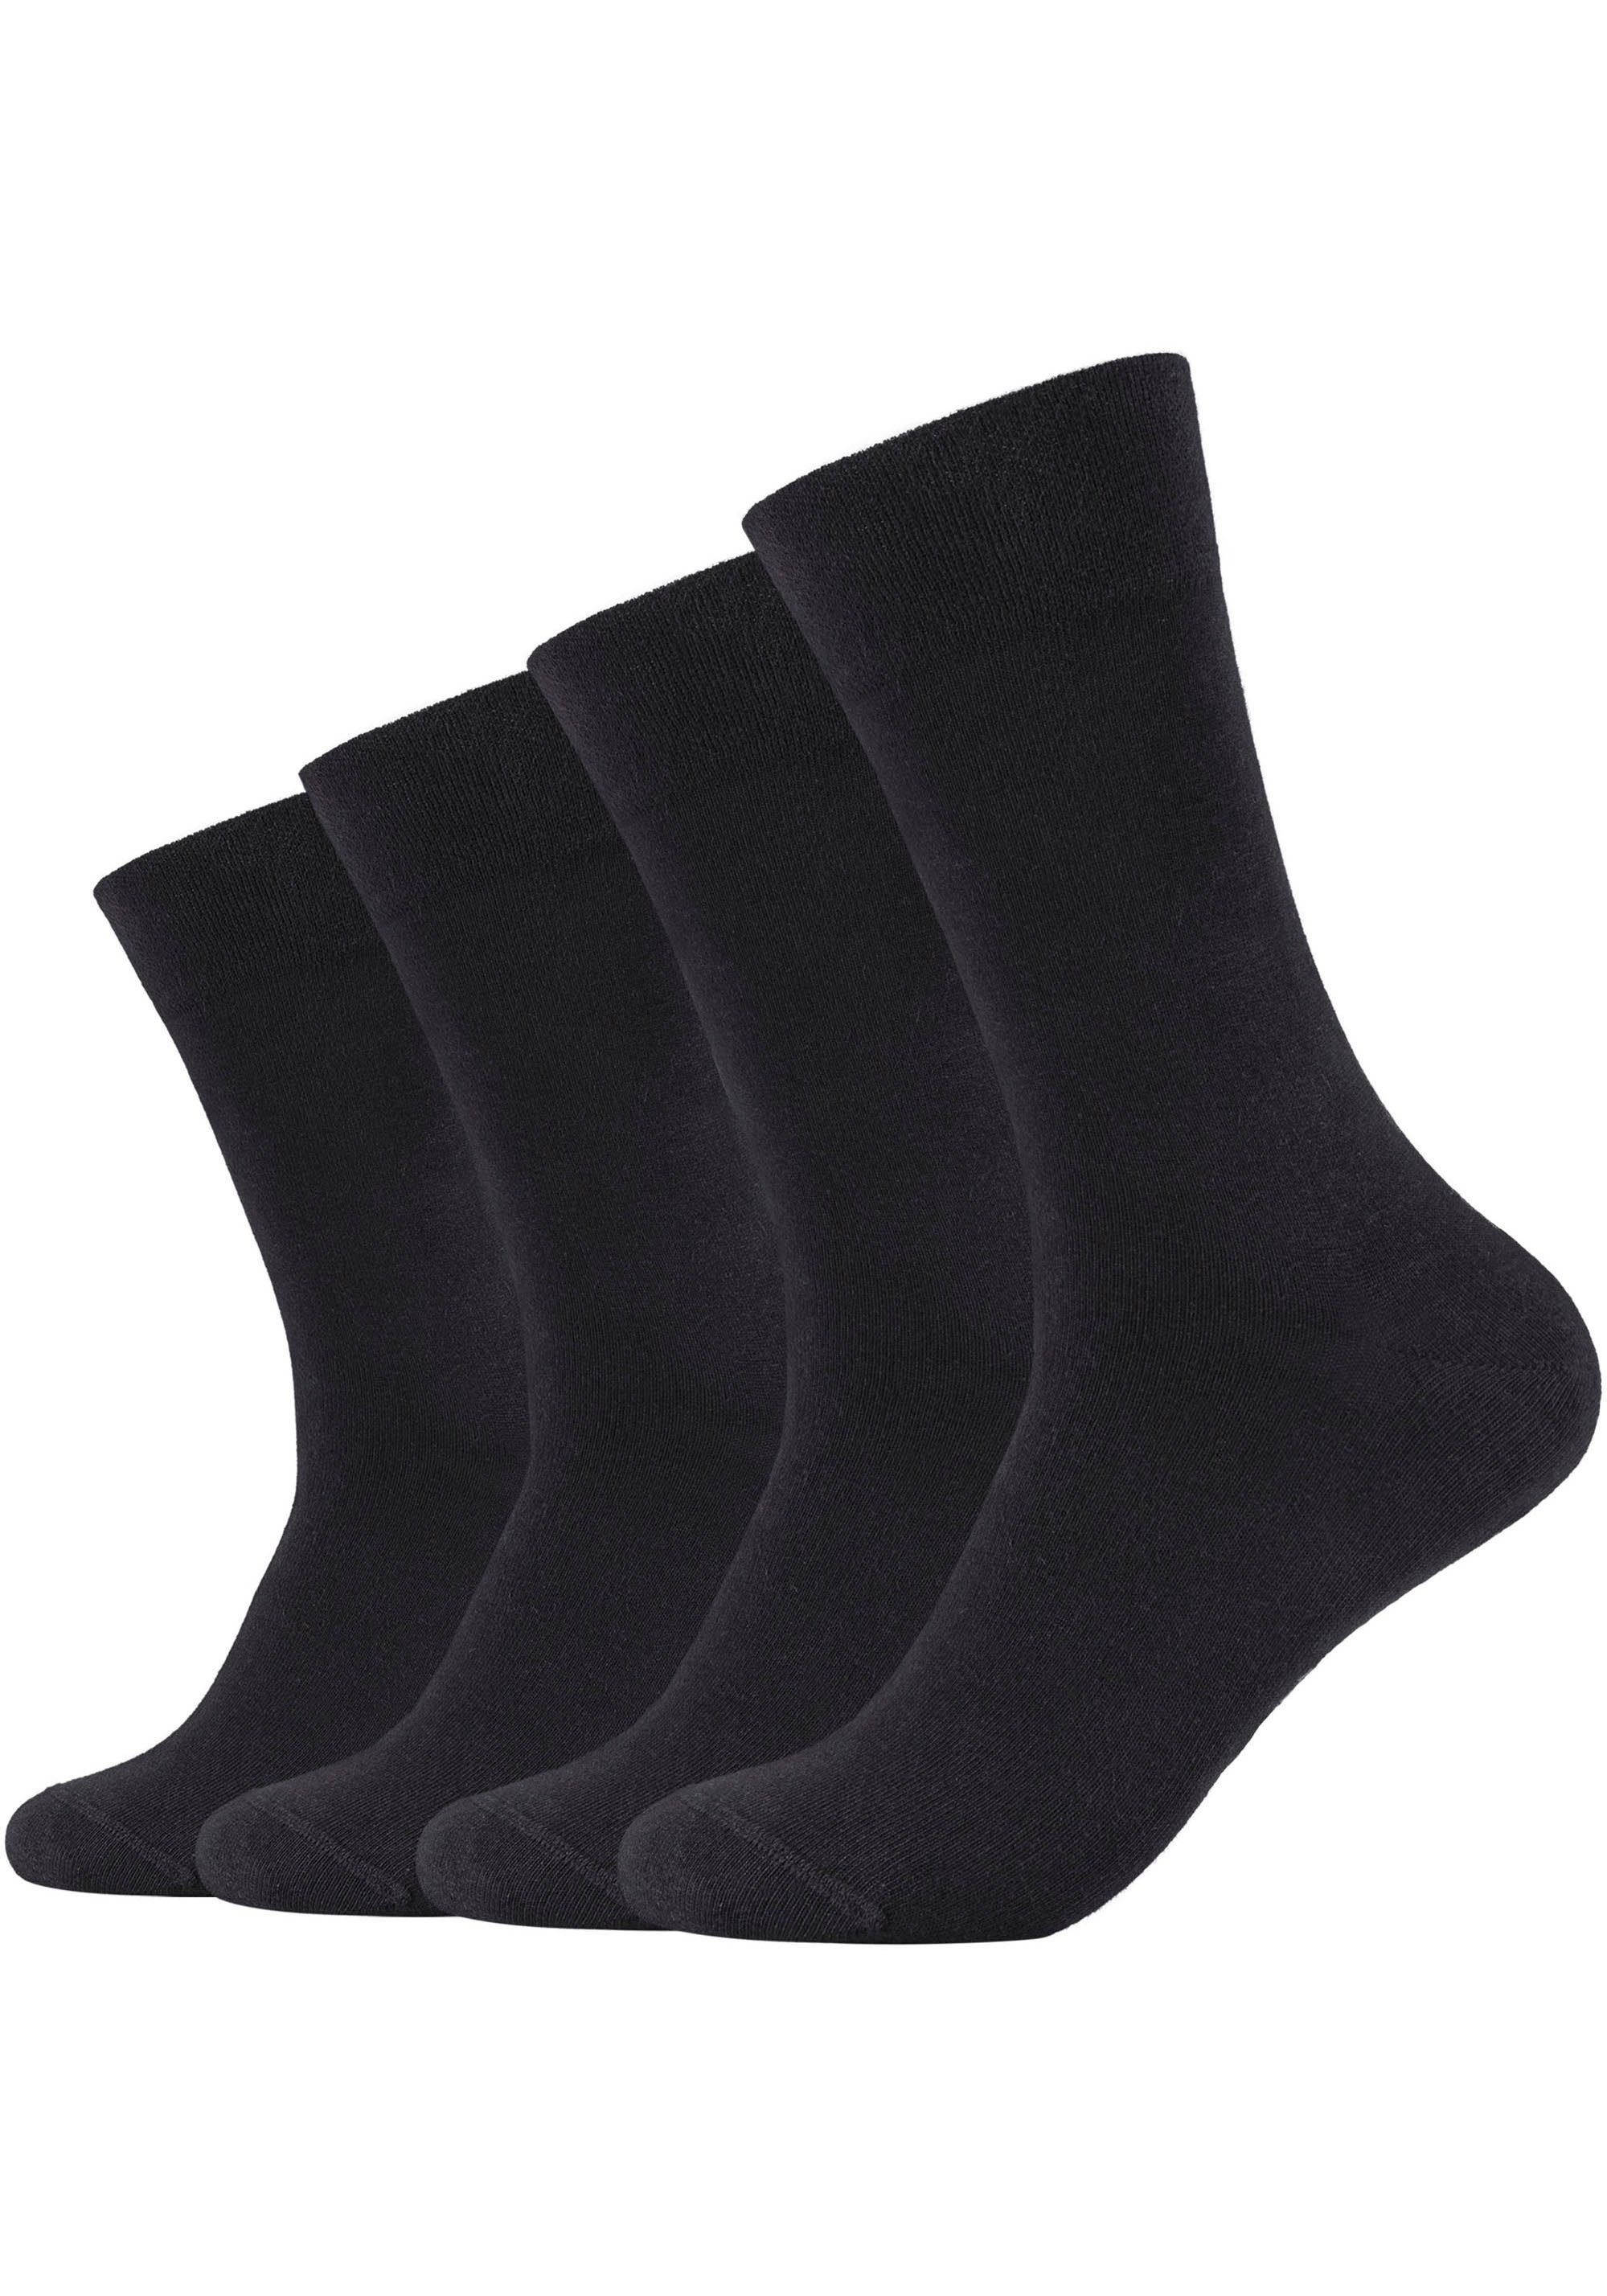 Camano Socken (Packung, schwarz 97% Bio-Baumwolle Atmungsaktiv: 4-Paar)